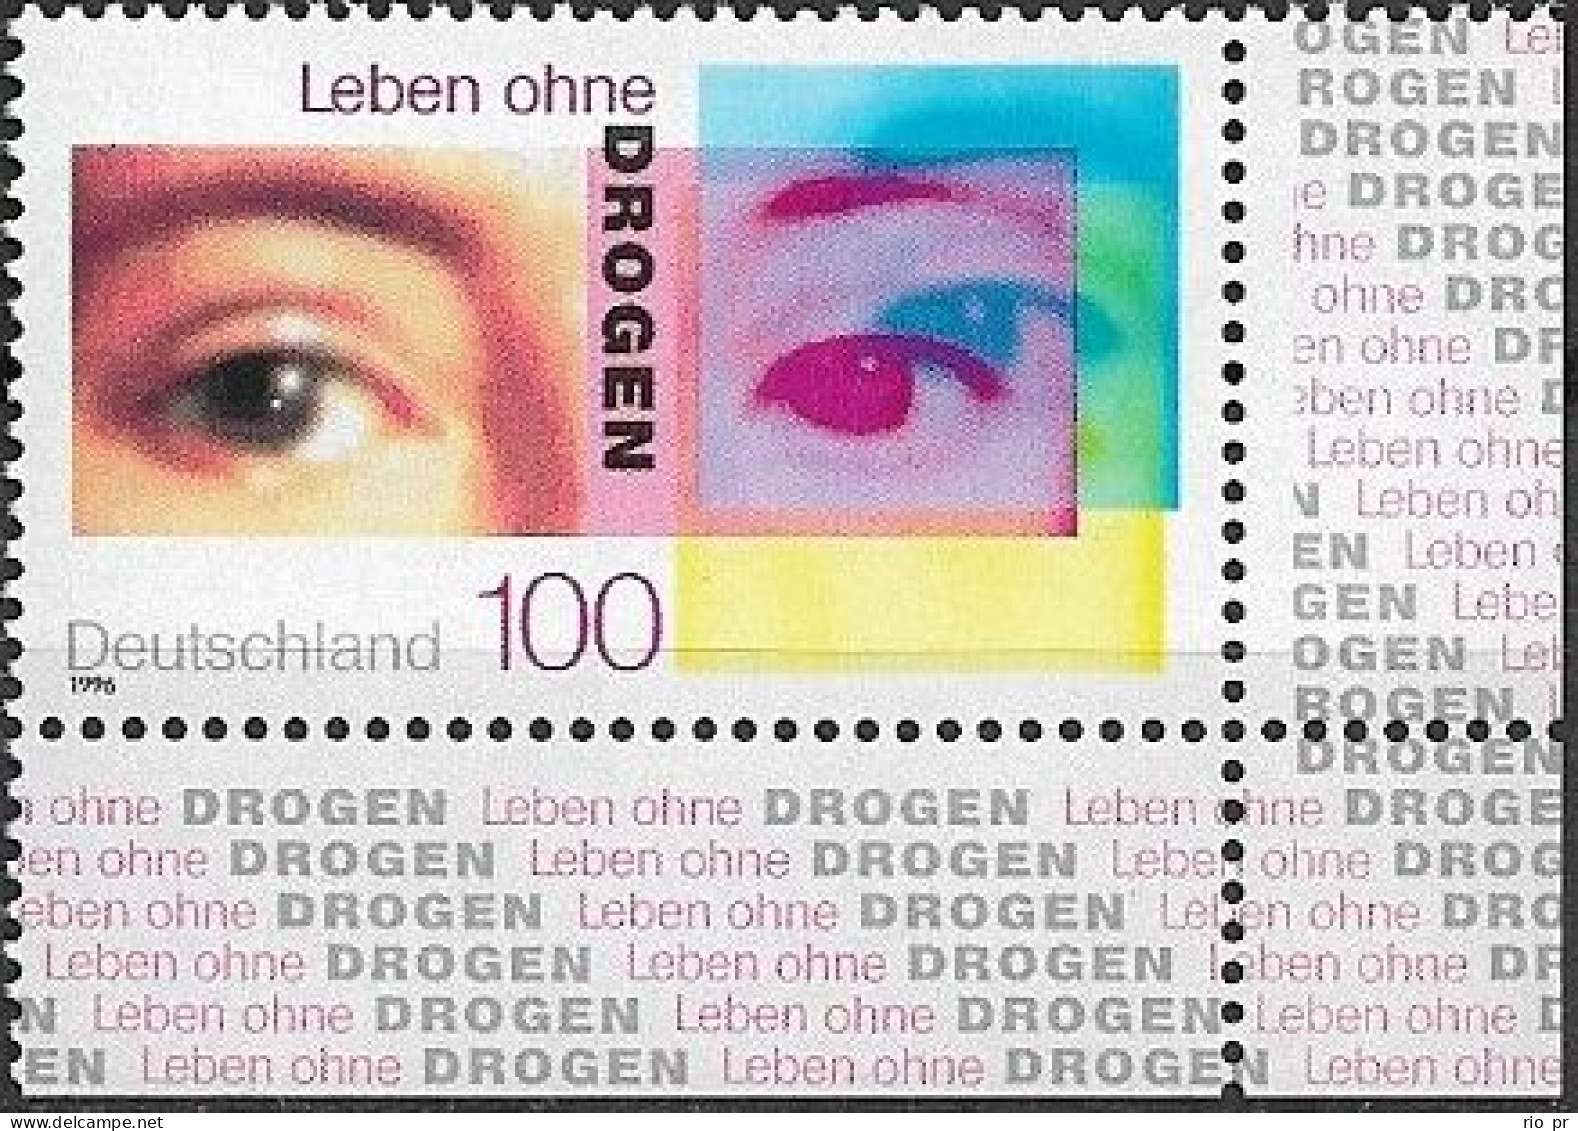 GERMANY (BRD) - CAMPAIGN AGAINST DRUG ABUSE (BOTTON RIGHT CORNER) 1996 - MNH - Drogen